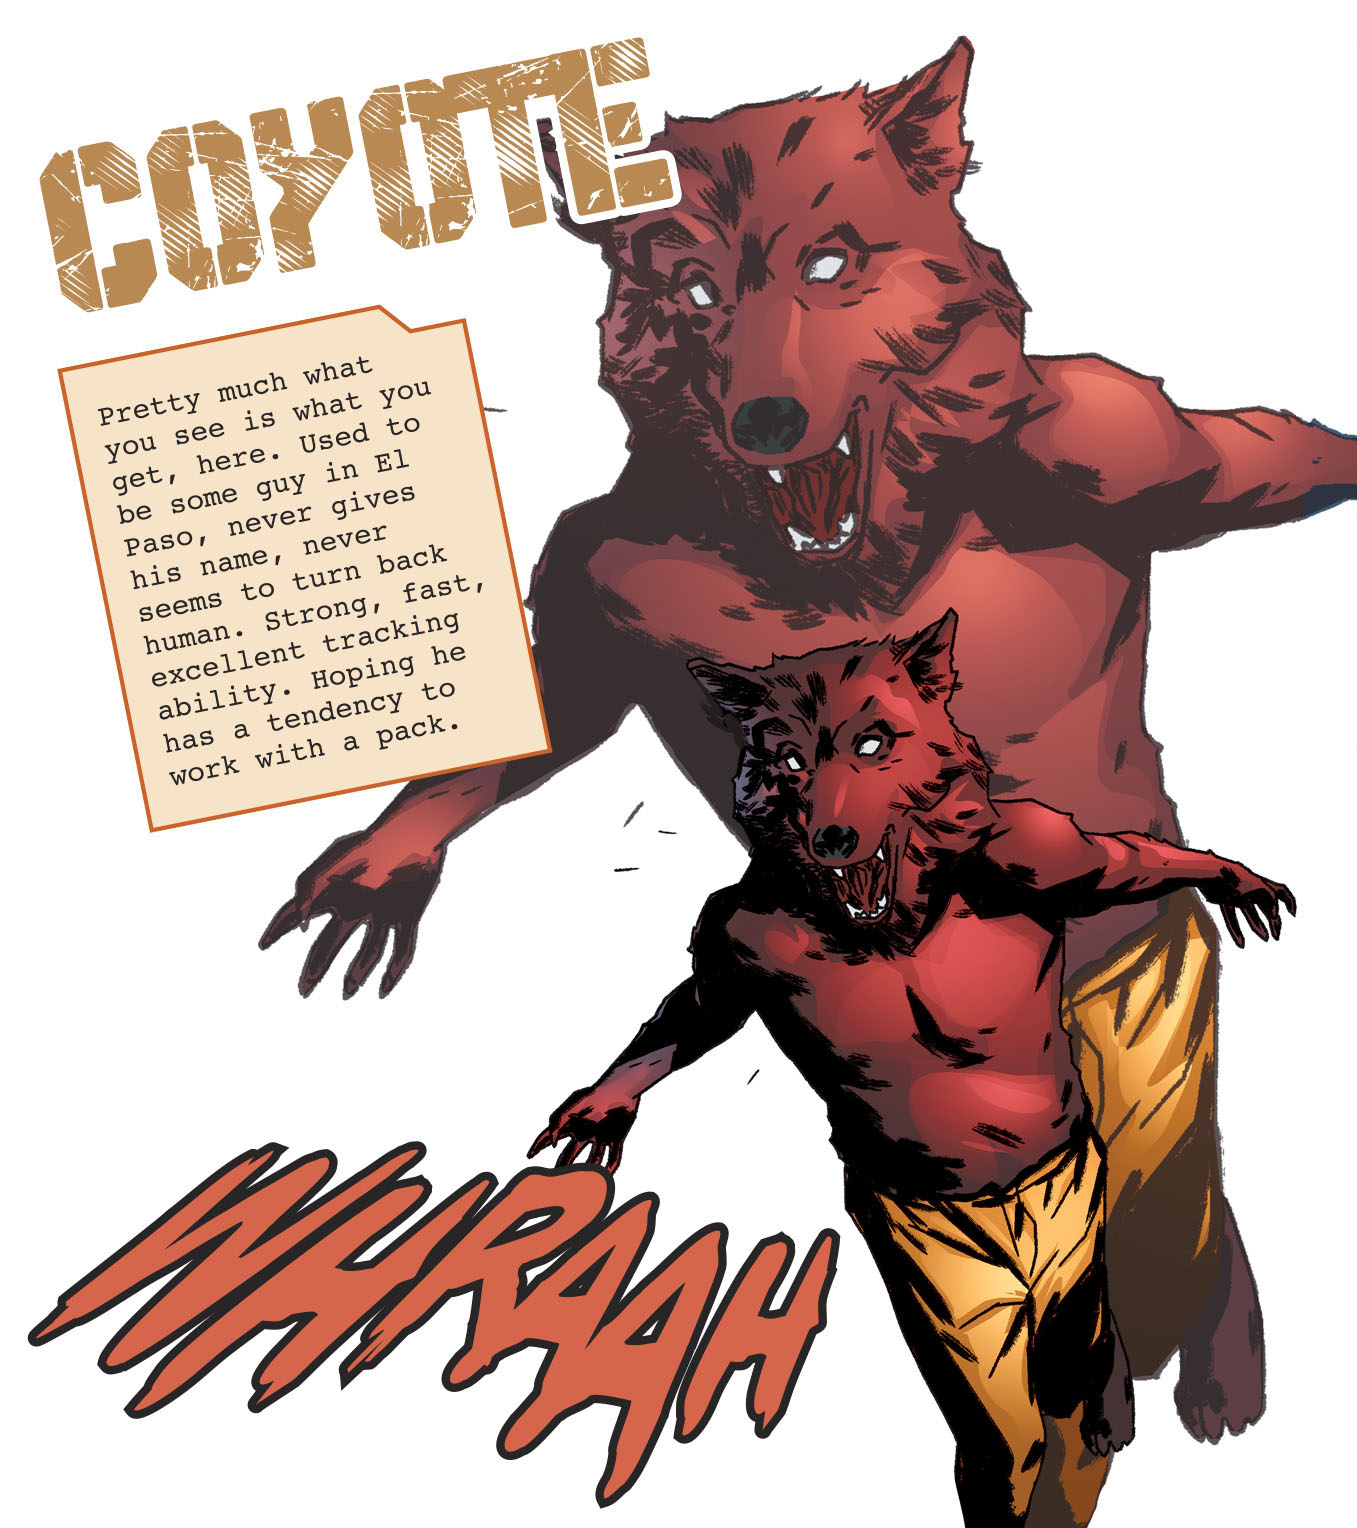 coyote tv show